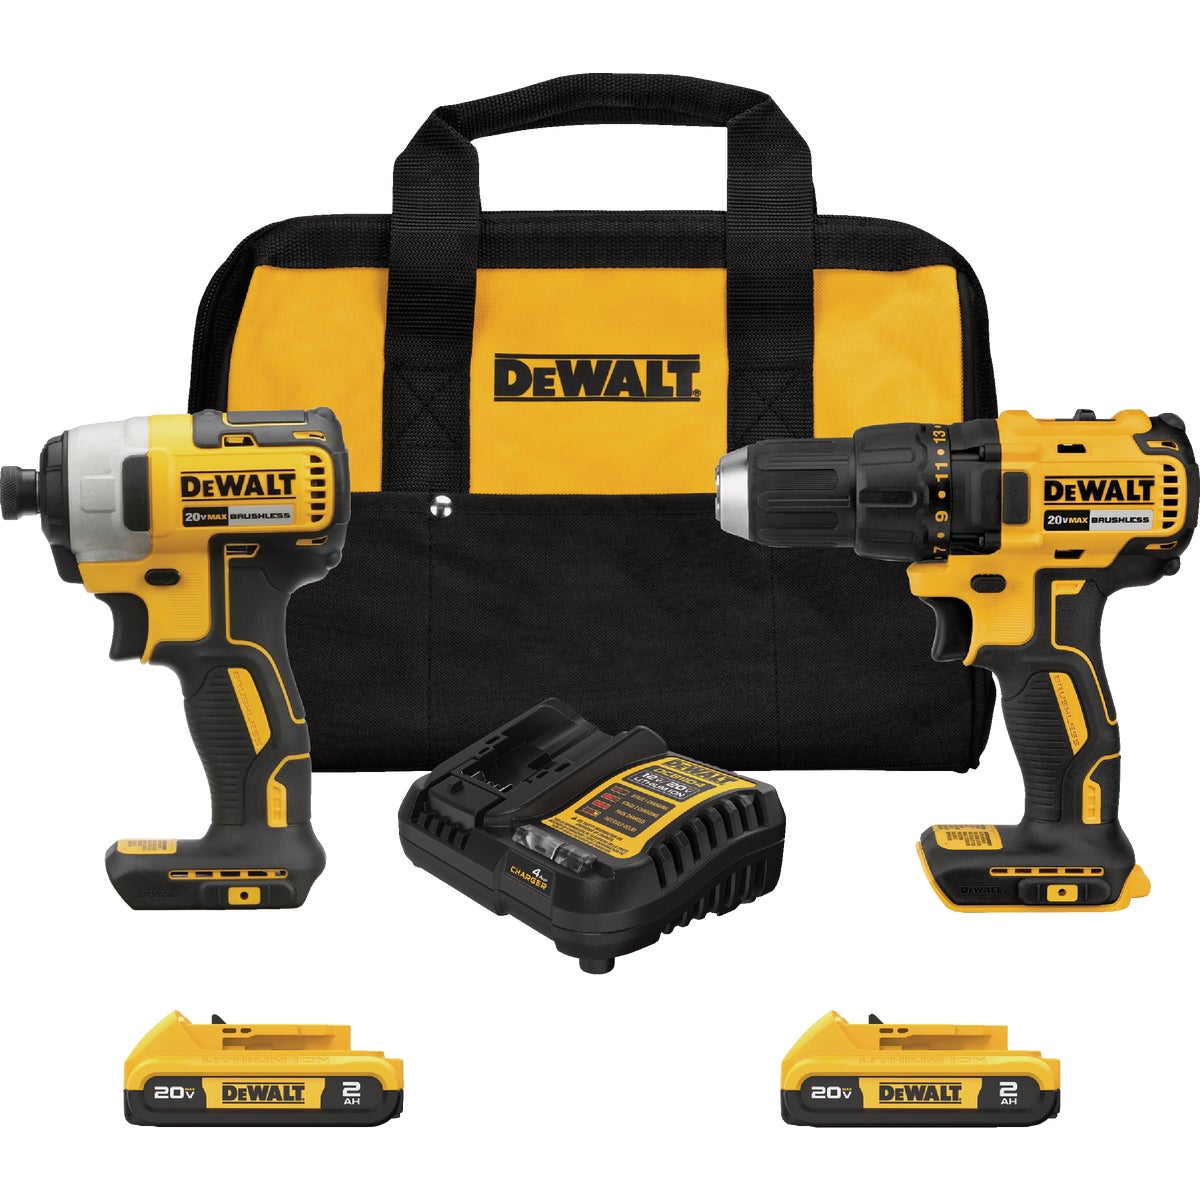 DEWALT 2-Tool 20V MAX Brushless Drill/Driver & Impact Driver Cordless Tool Combo Kit